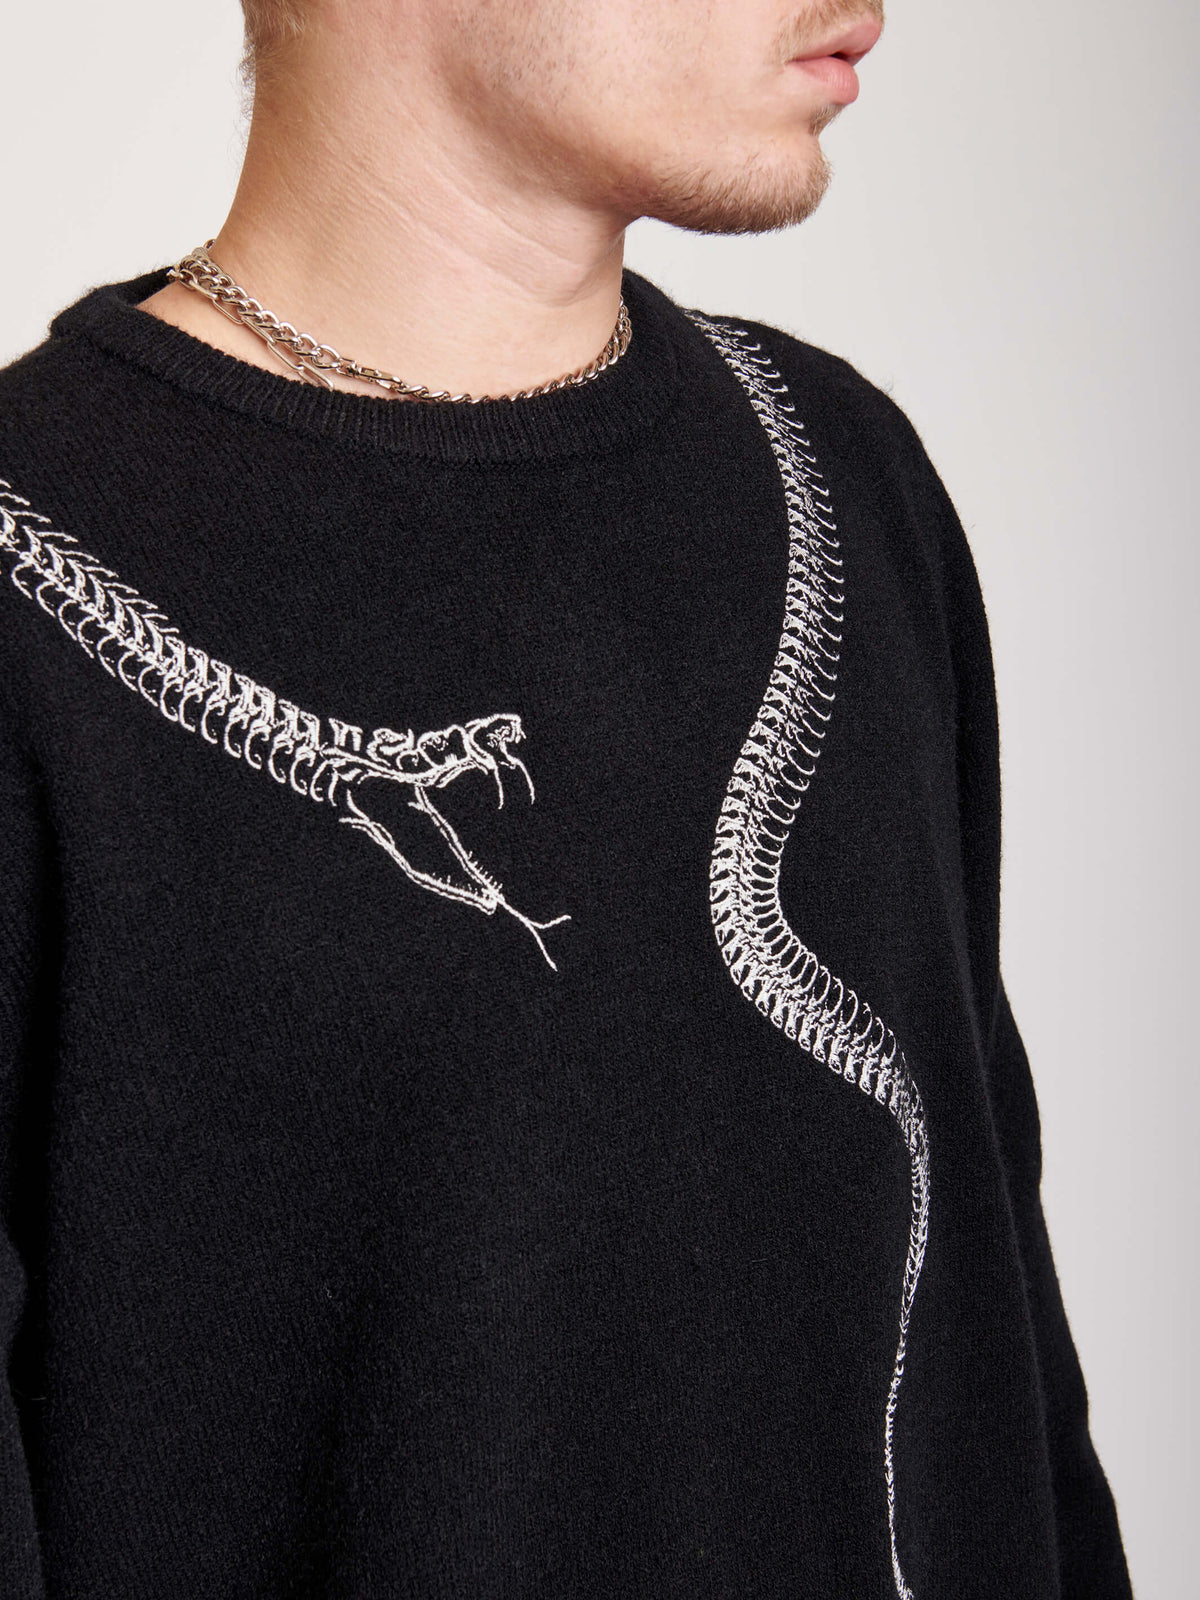 sweater with skeleton snake detail around neck.